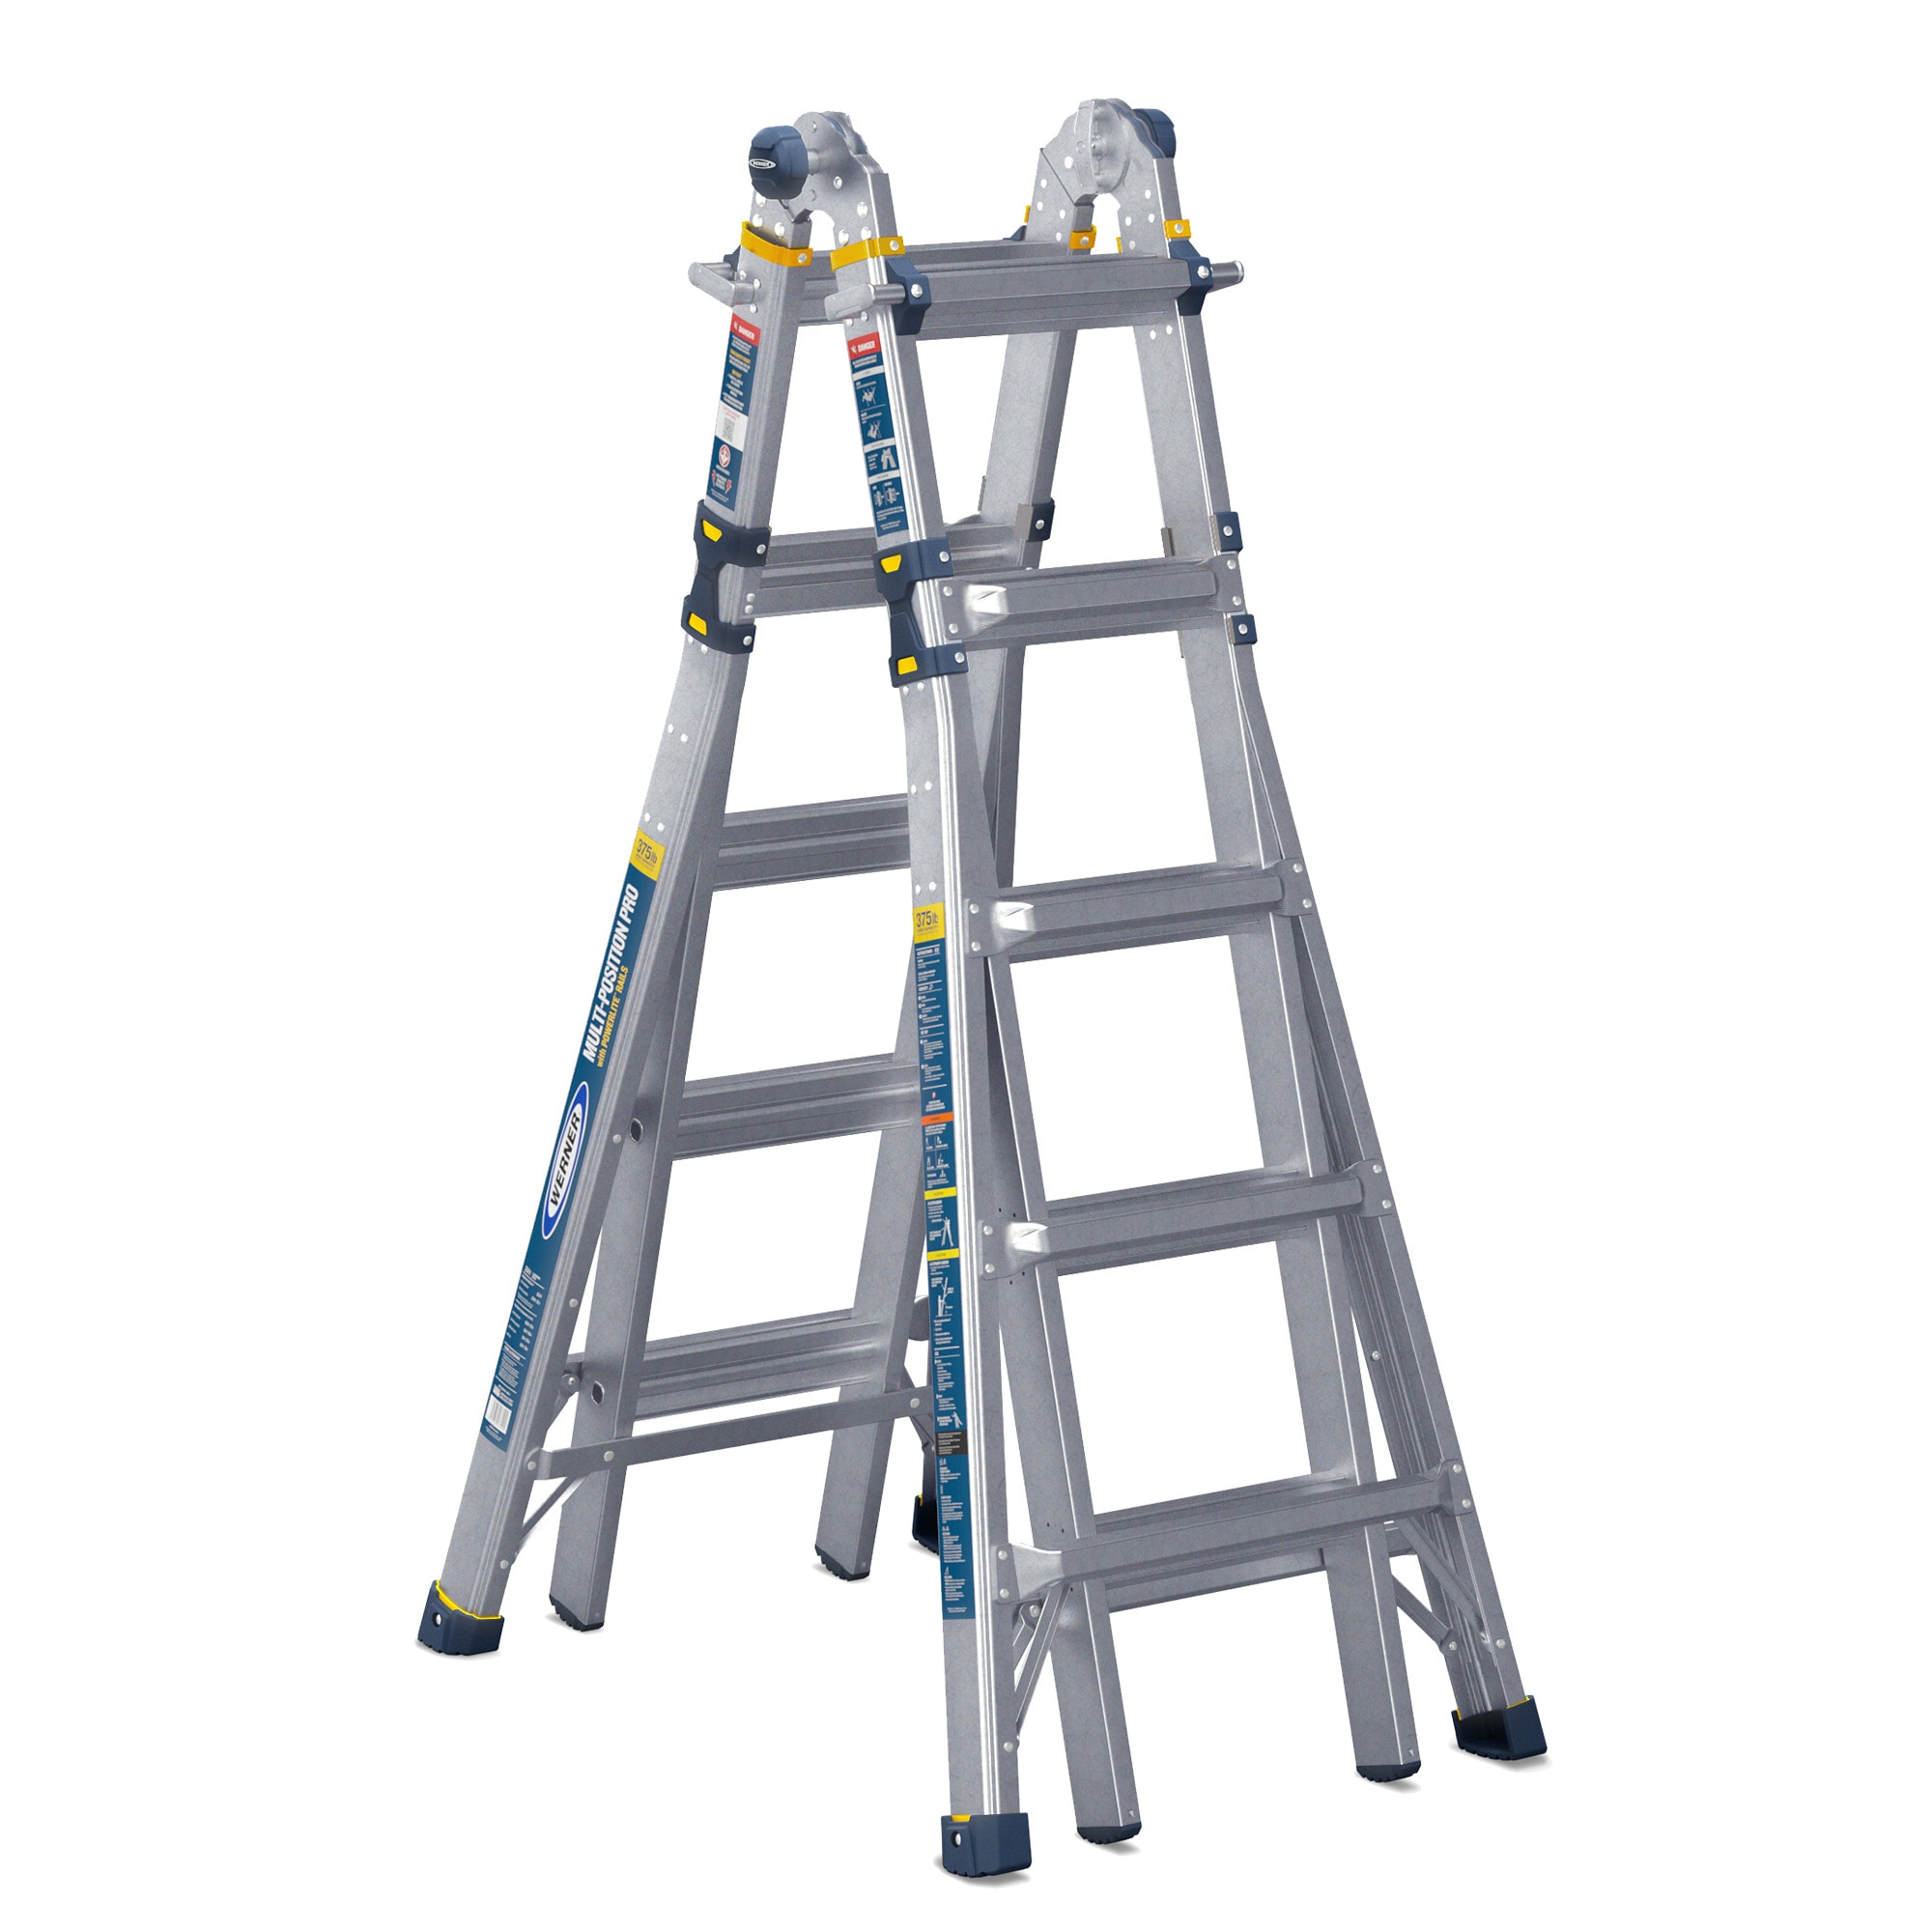 Werner Multi-Position Ladders at Lowes.com